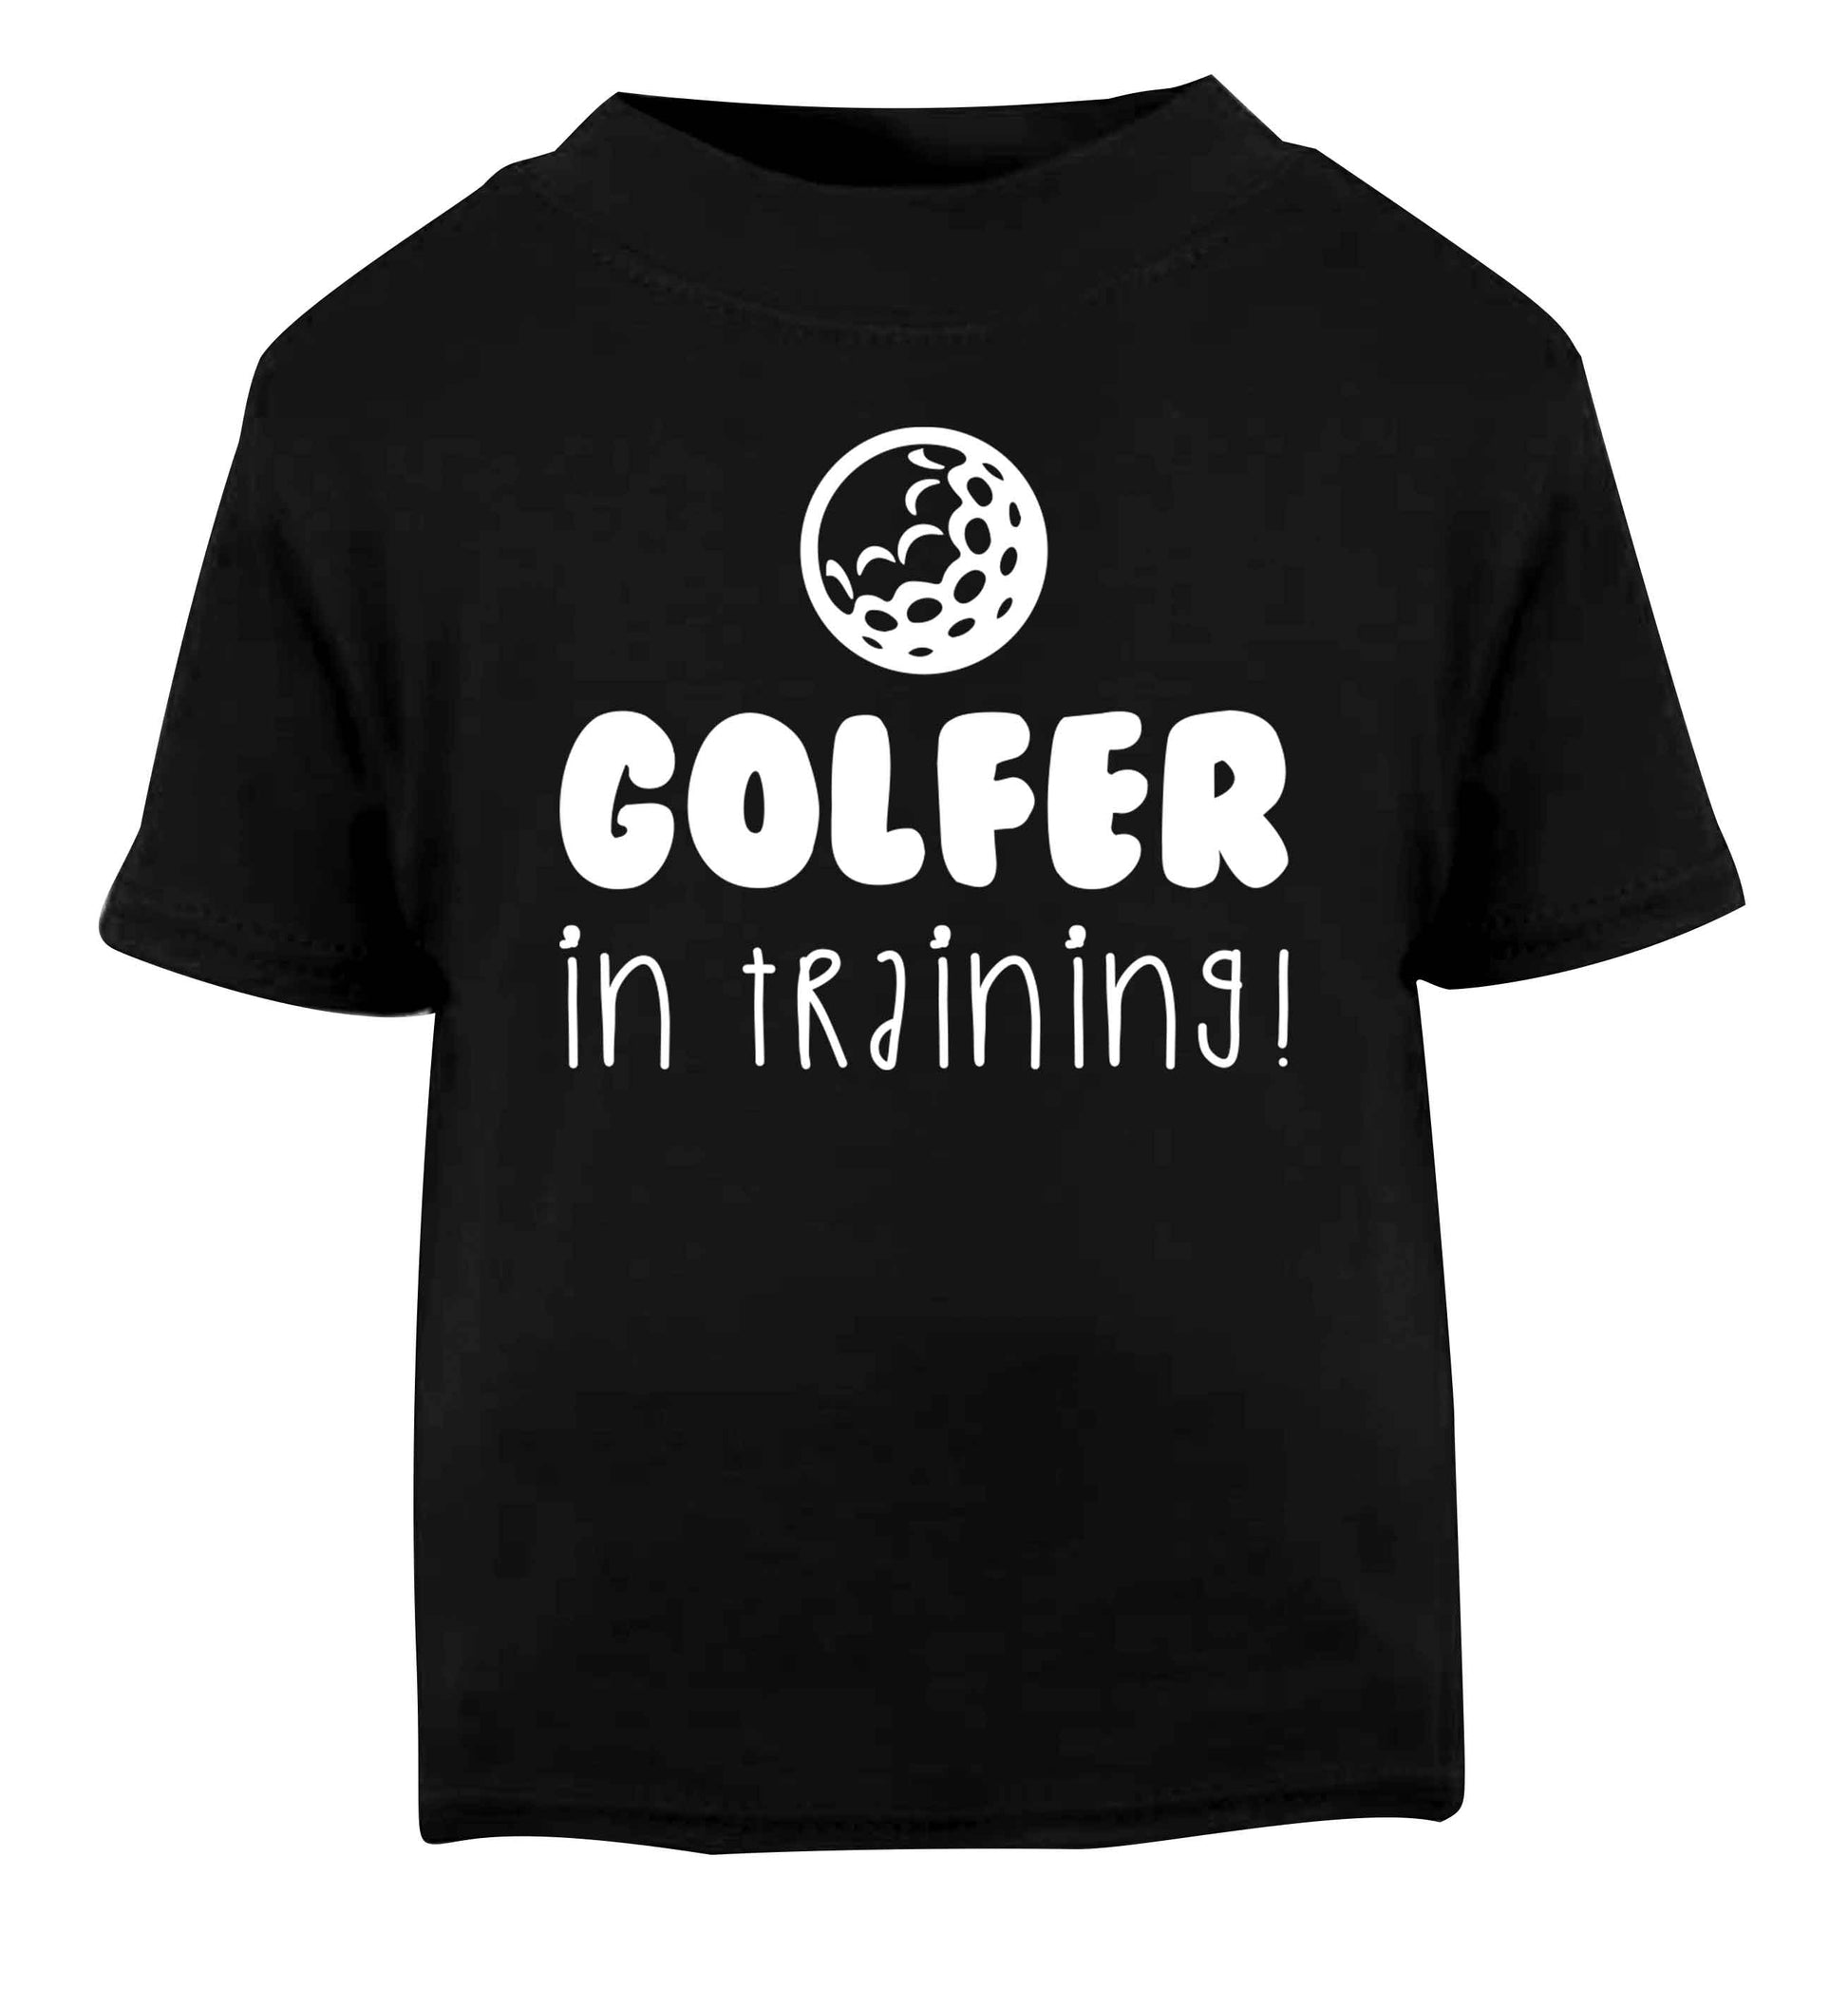 Golfer in training Black Baby Toddler Tshirt 2 years